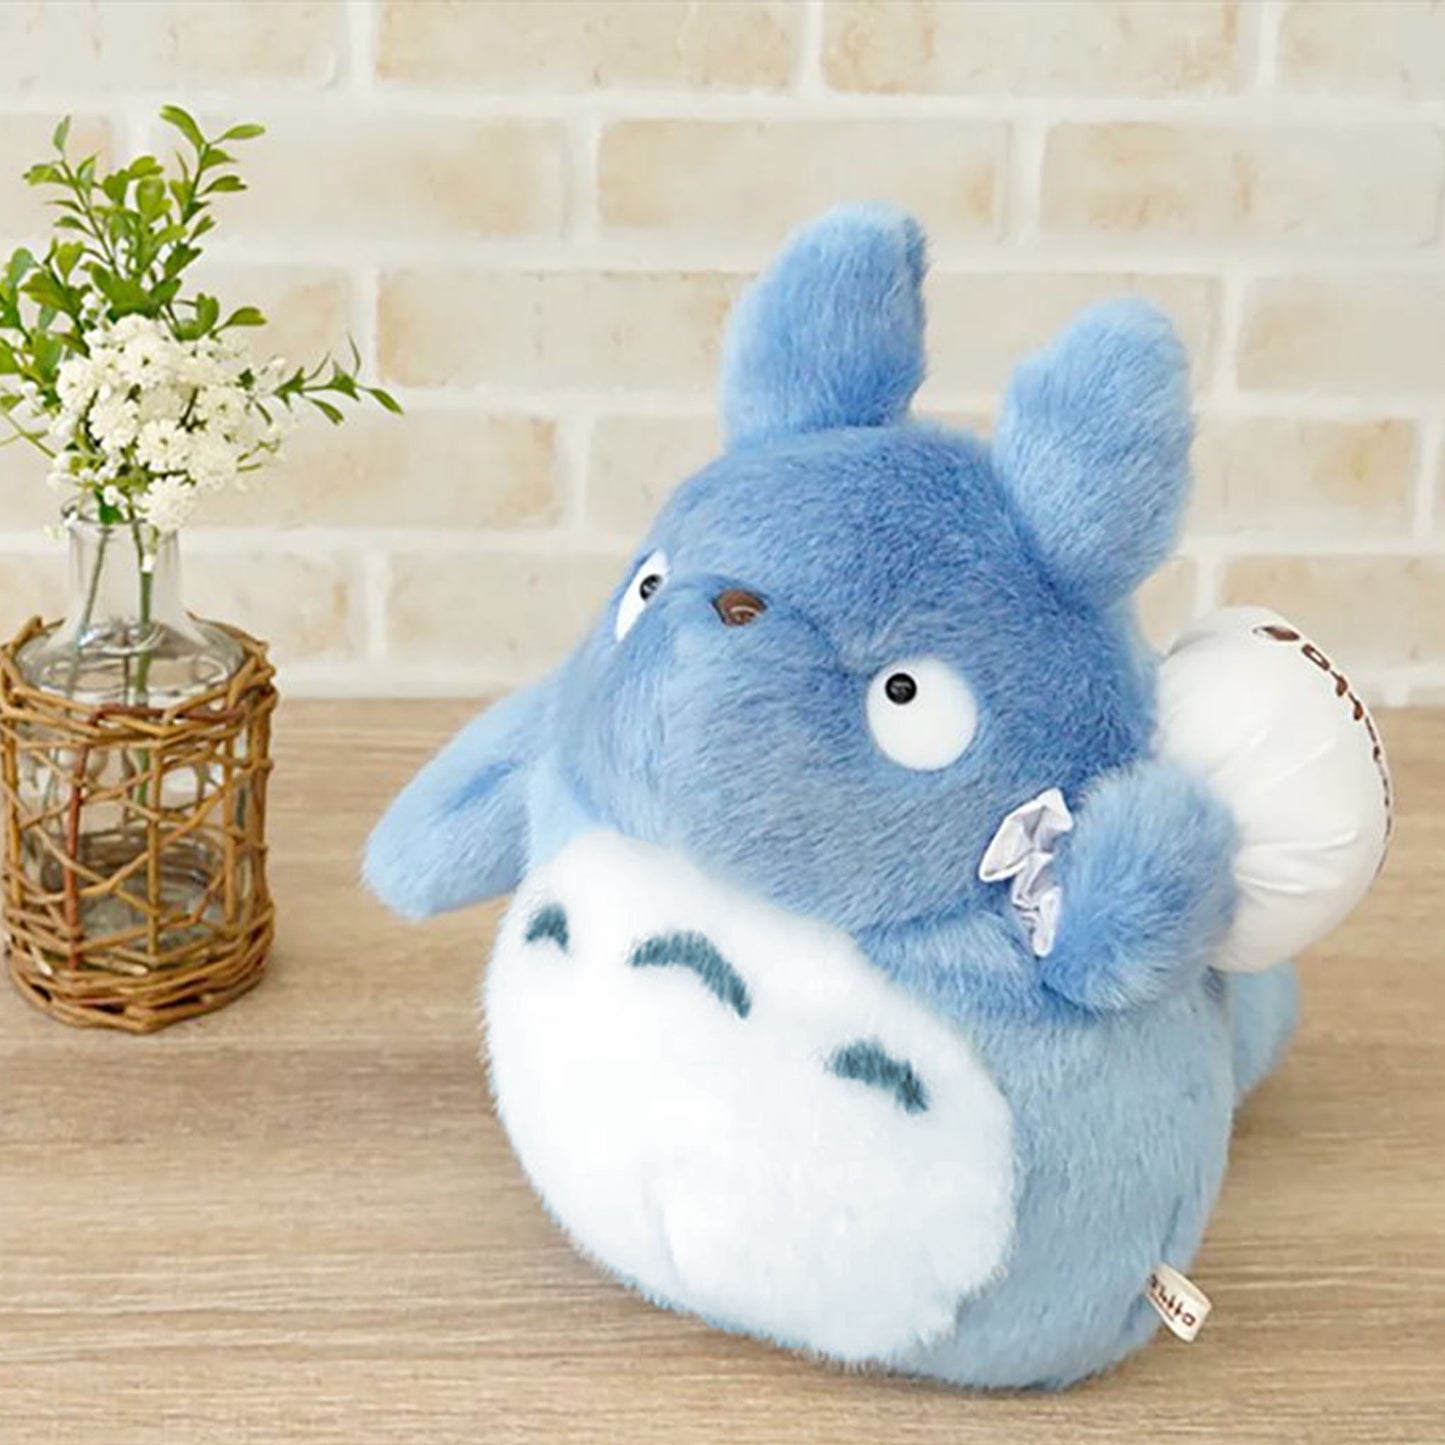 Medium Totoro (My Neighbor Totoro) Studio Ghibli Blue 9" Plush